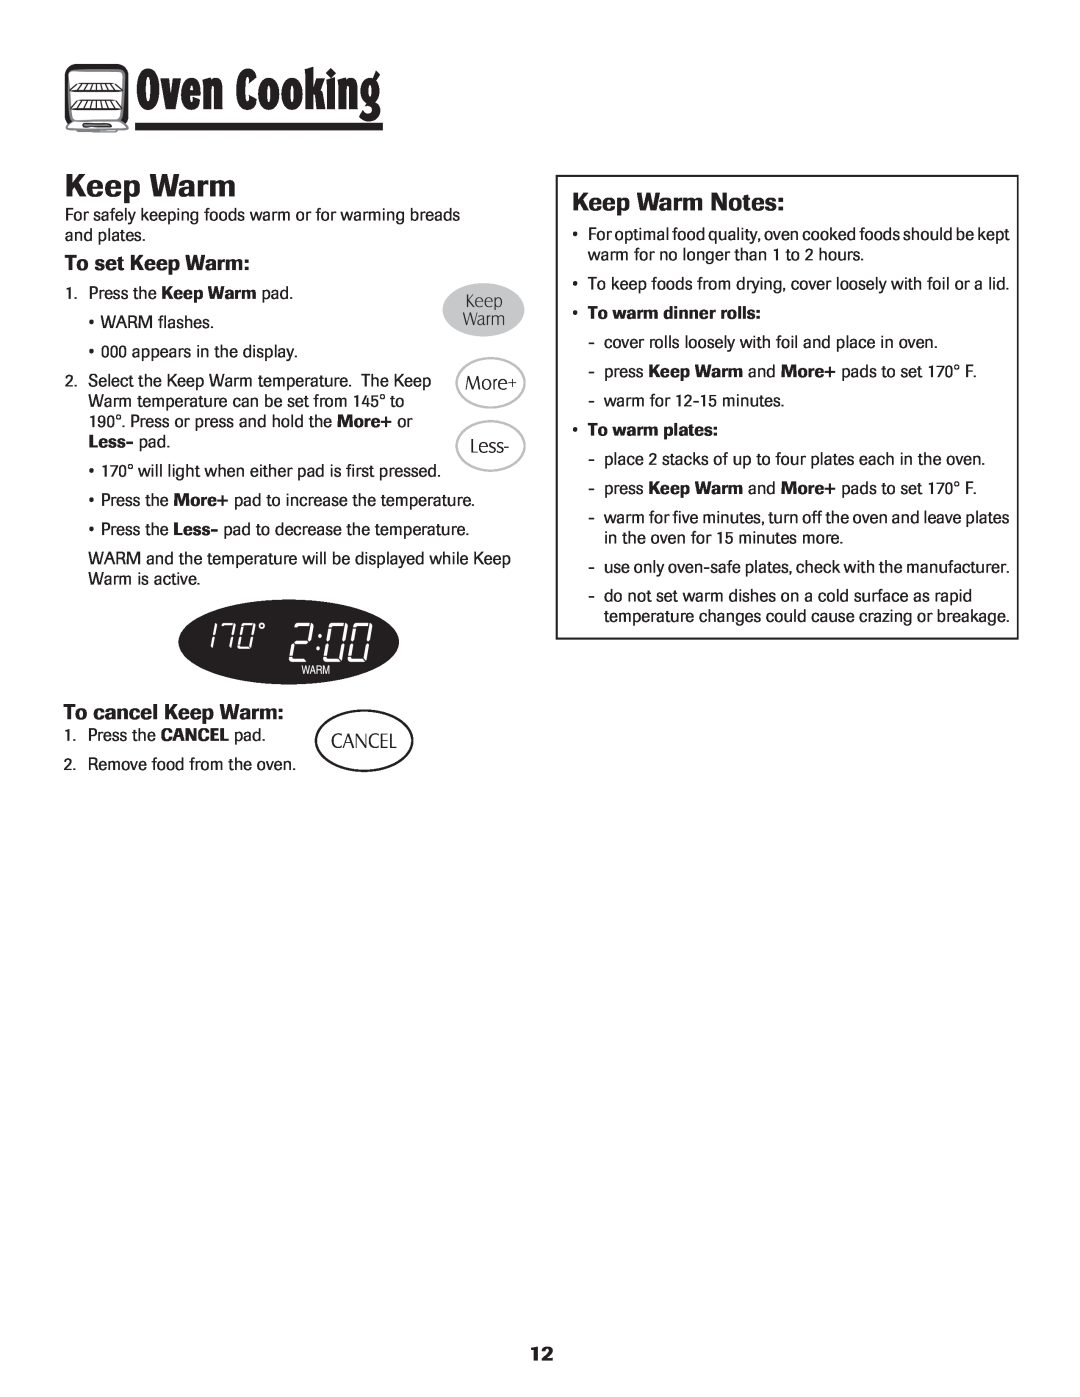 Maytag 700 manual Keep Warm Notes, To set Keep Warm, To cancel Keep Warm, Oven Cooking 